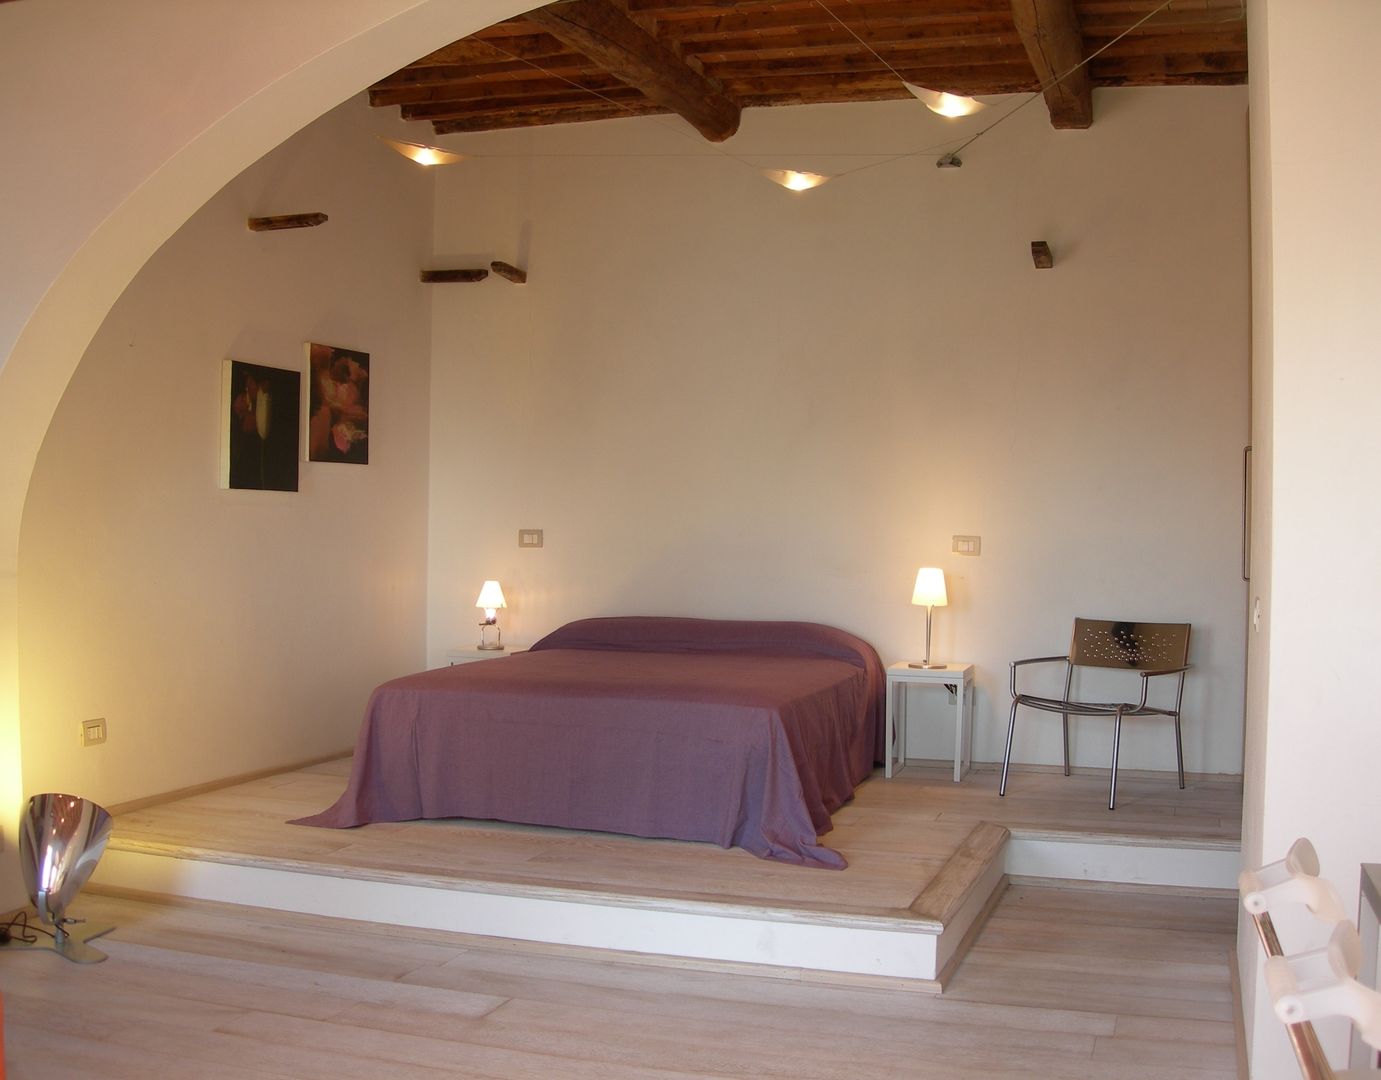 Casa per vacanze a Chiessi (Isola d'Elba) - Italy, 70m2 Studio di architettura 70m2 Studio di architettura Dormitorios mediterráneos